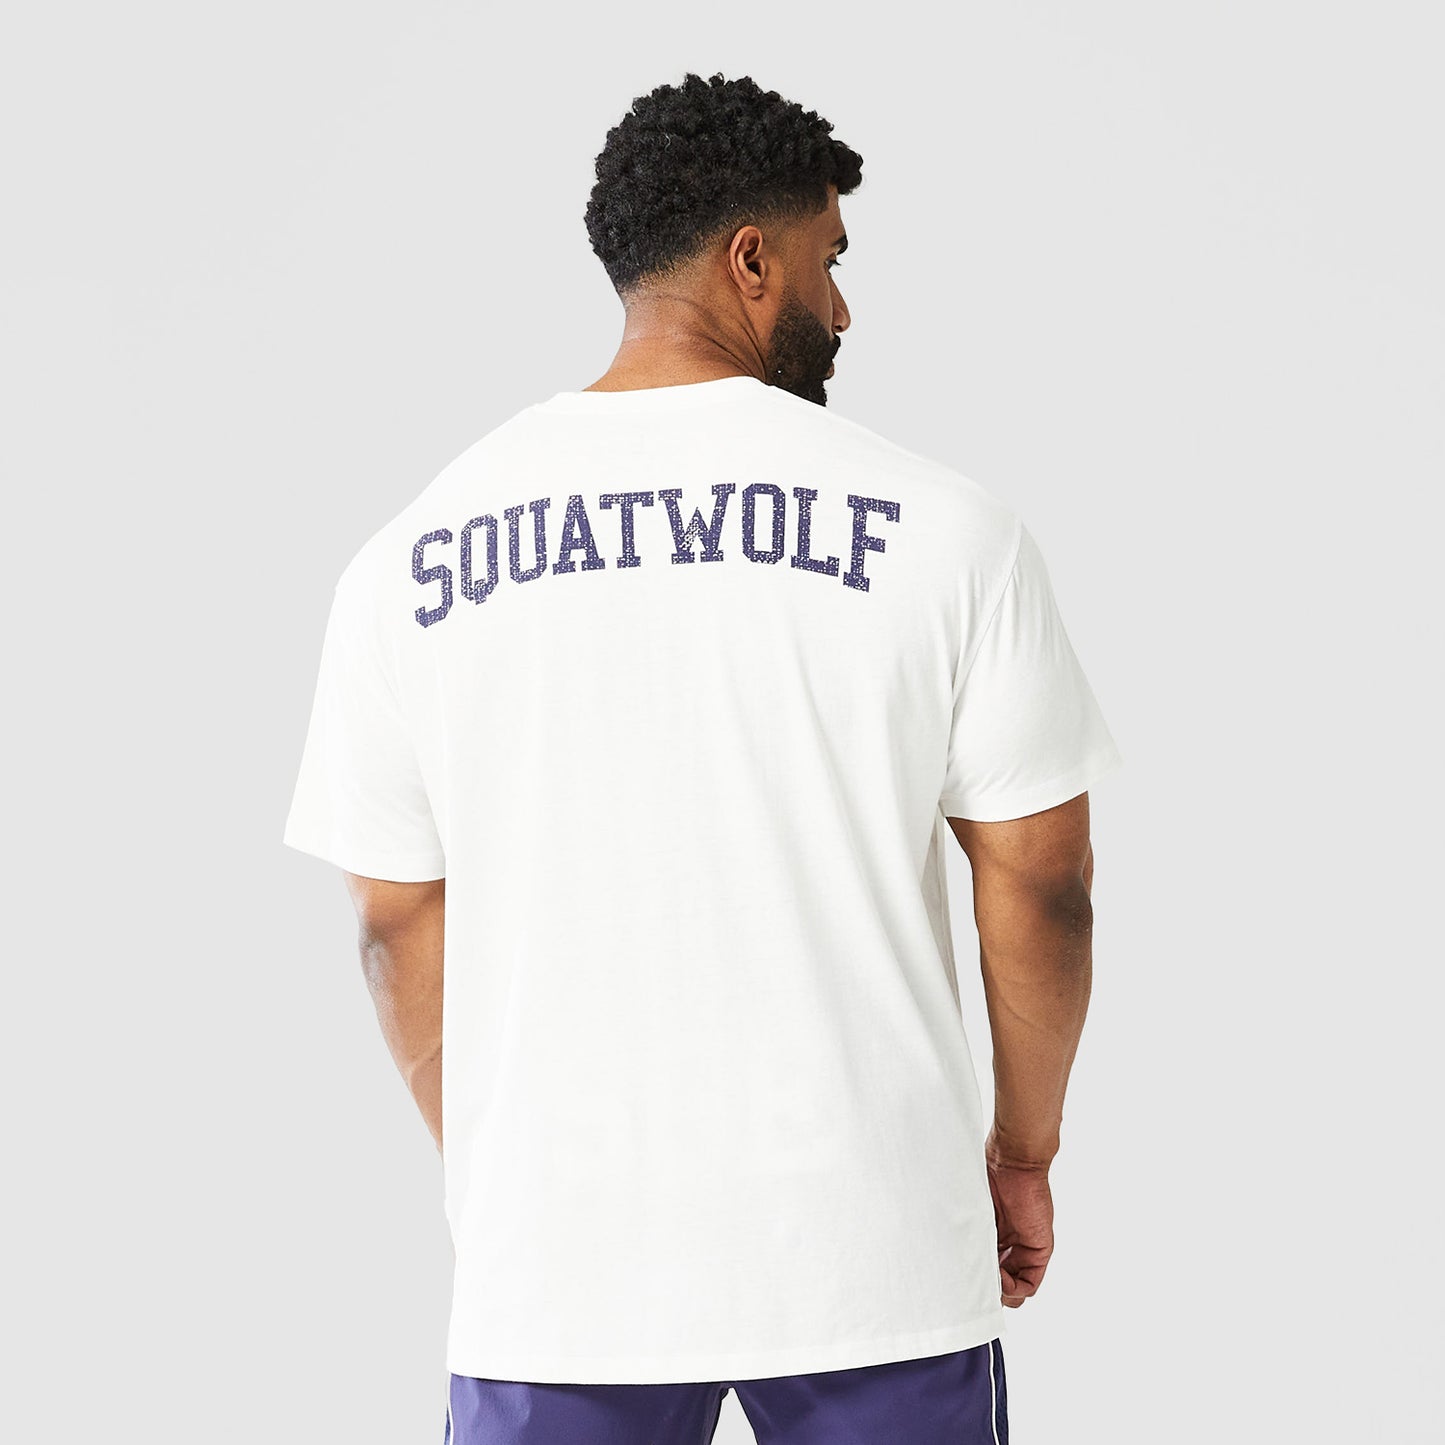 squatwolf-gym-wear-golden-era-core-oversized-tee-white-workout-shirts-for-men